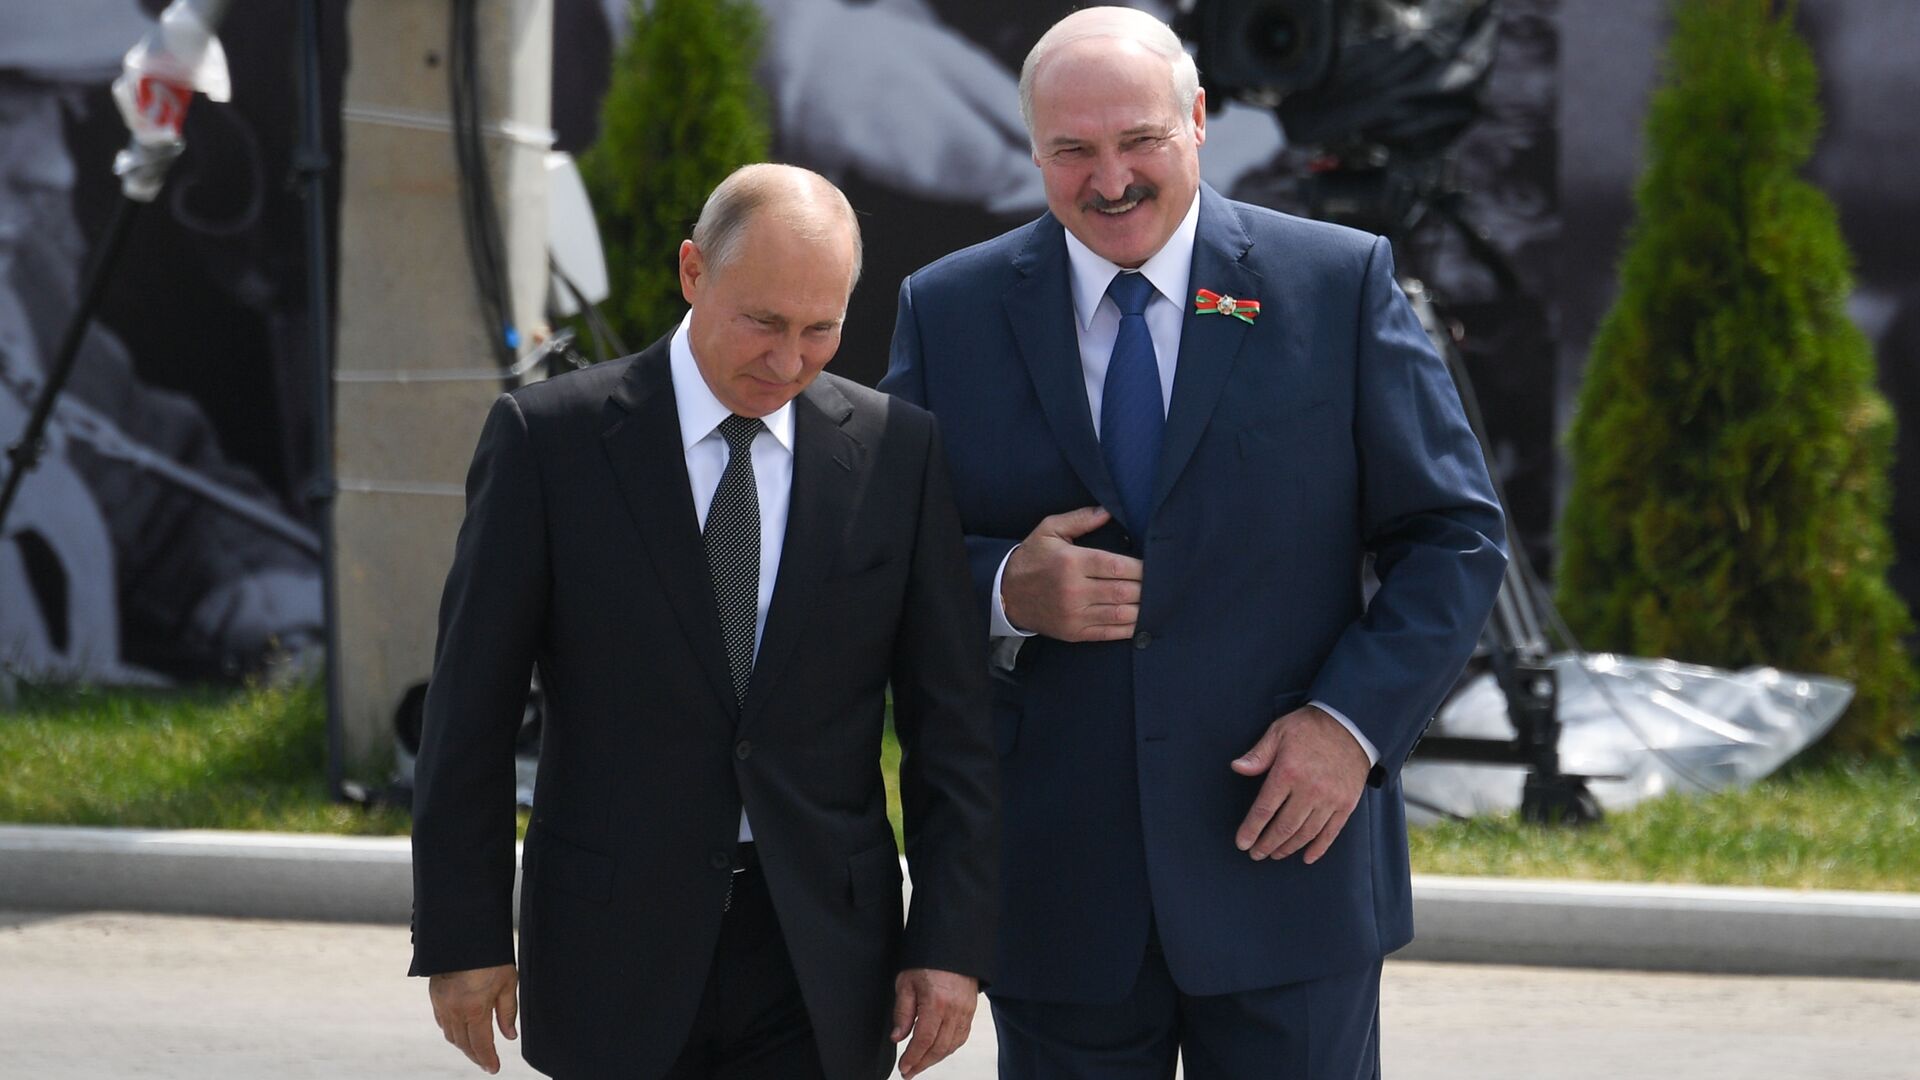 Президент РФ Владимир Путин и президент Белоруссии Александр Лукашенко, фото из архива - Sputnik Азербайджан, 1920, 15.04.2021